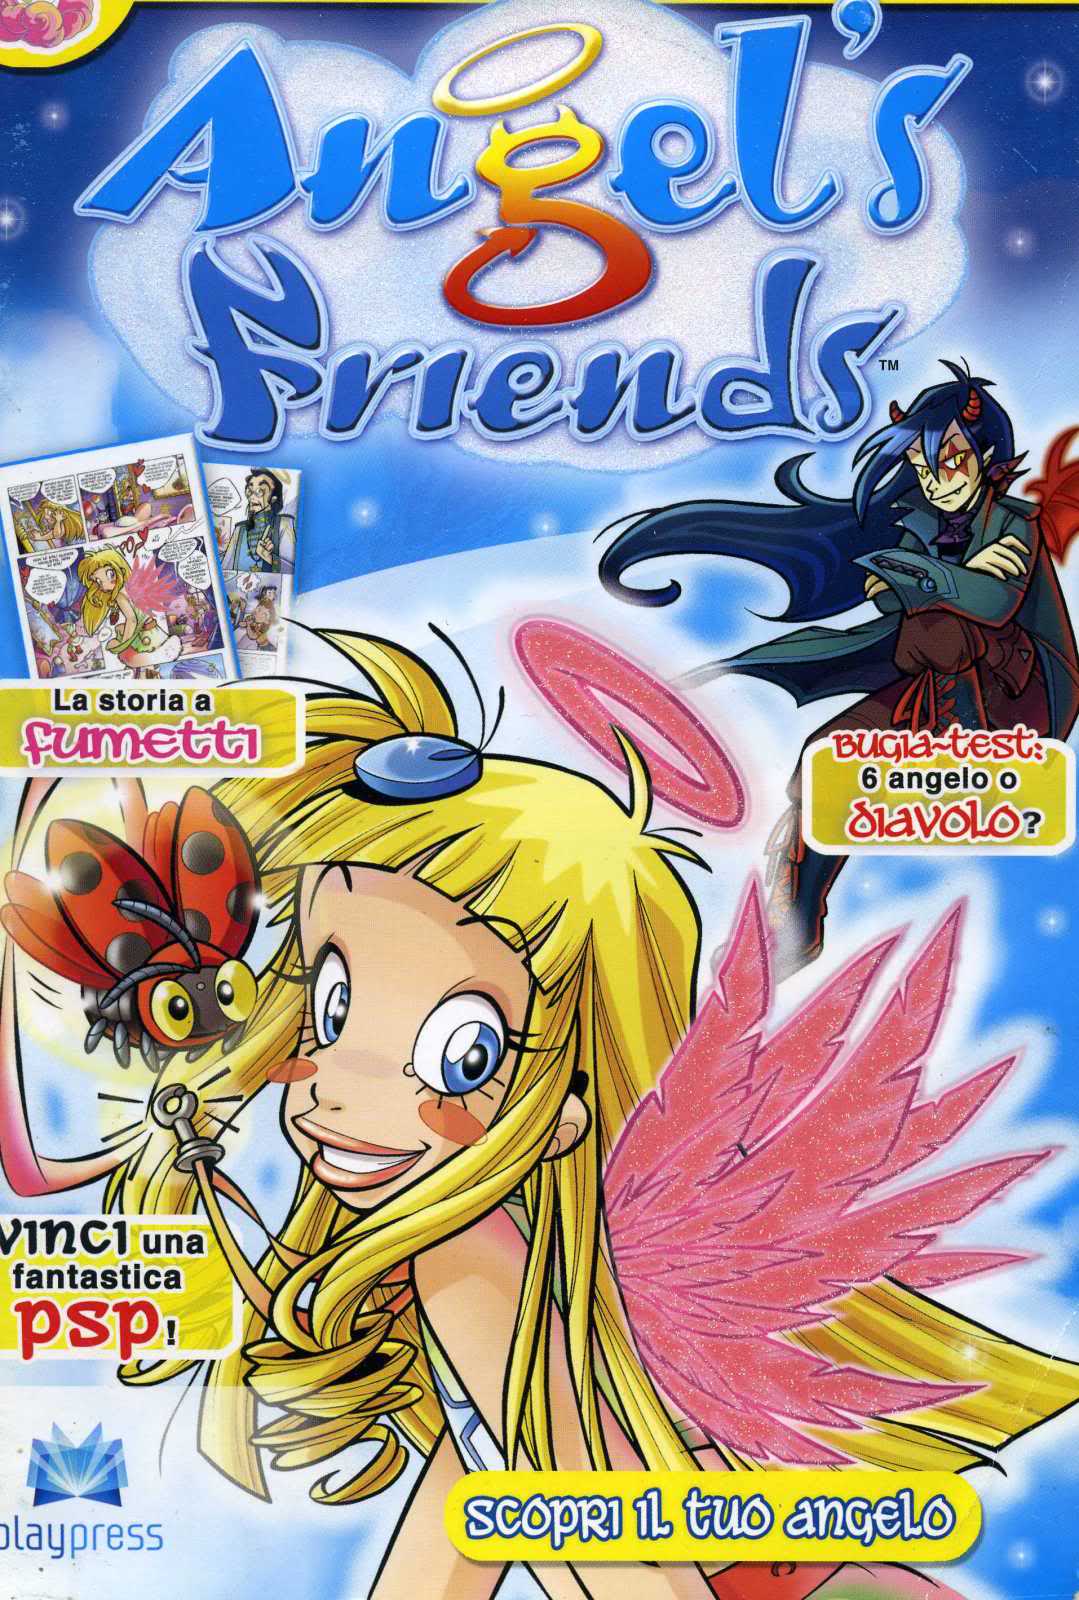 Angels comic. Друзья ангелы комикс. Angel's friends комикс 2007.